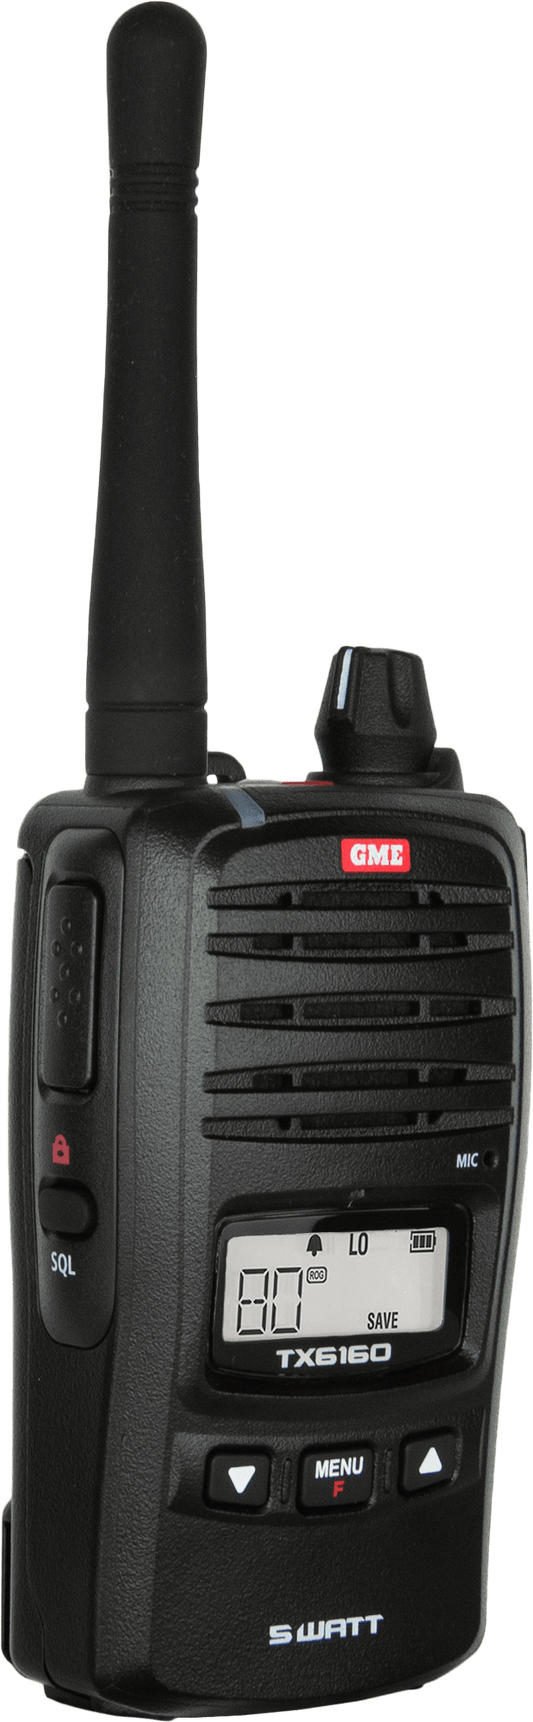 TX6160 5w/1w UHF CB Handheld Radio